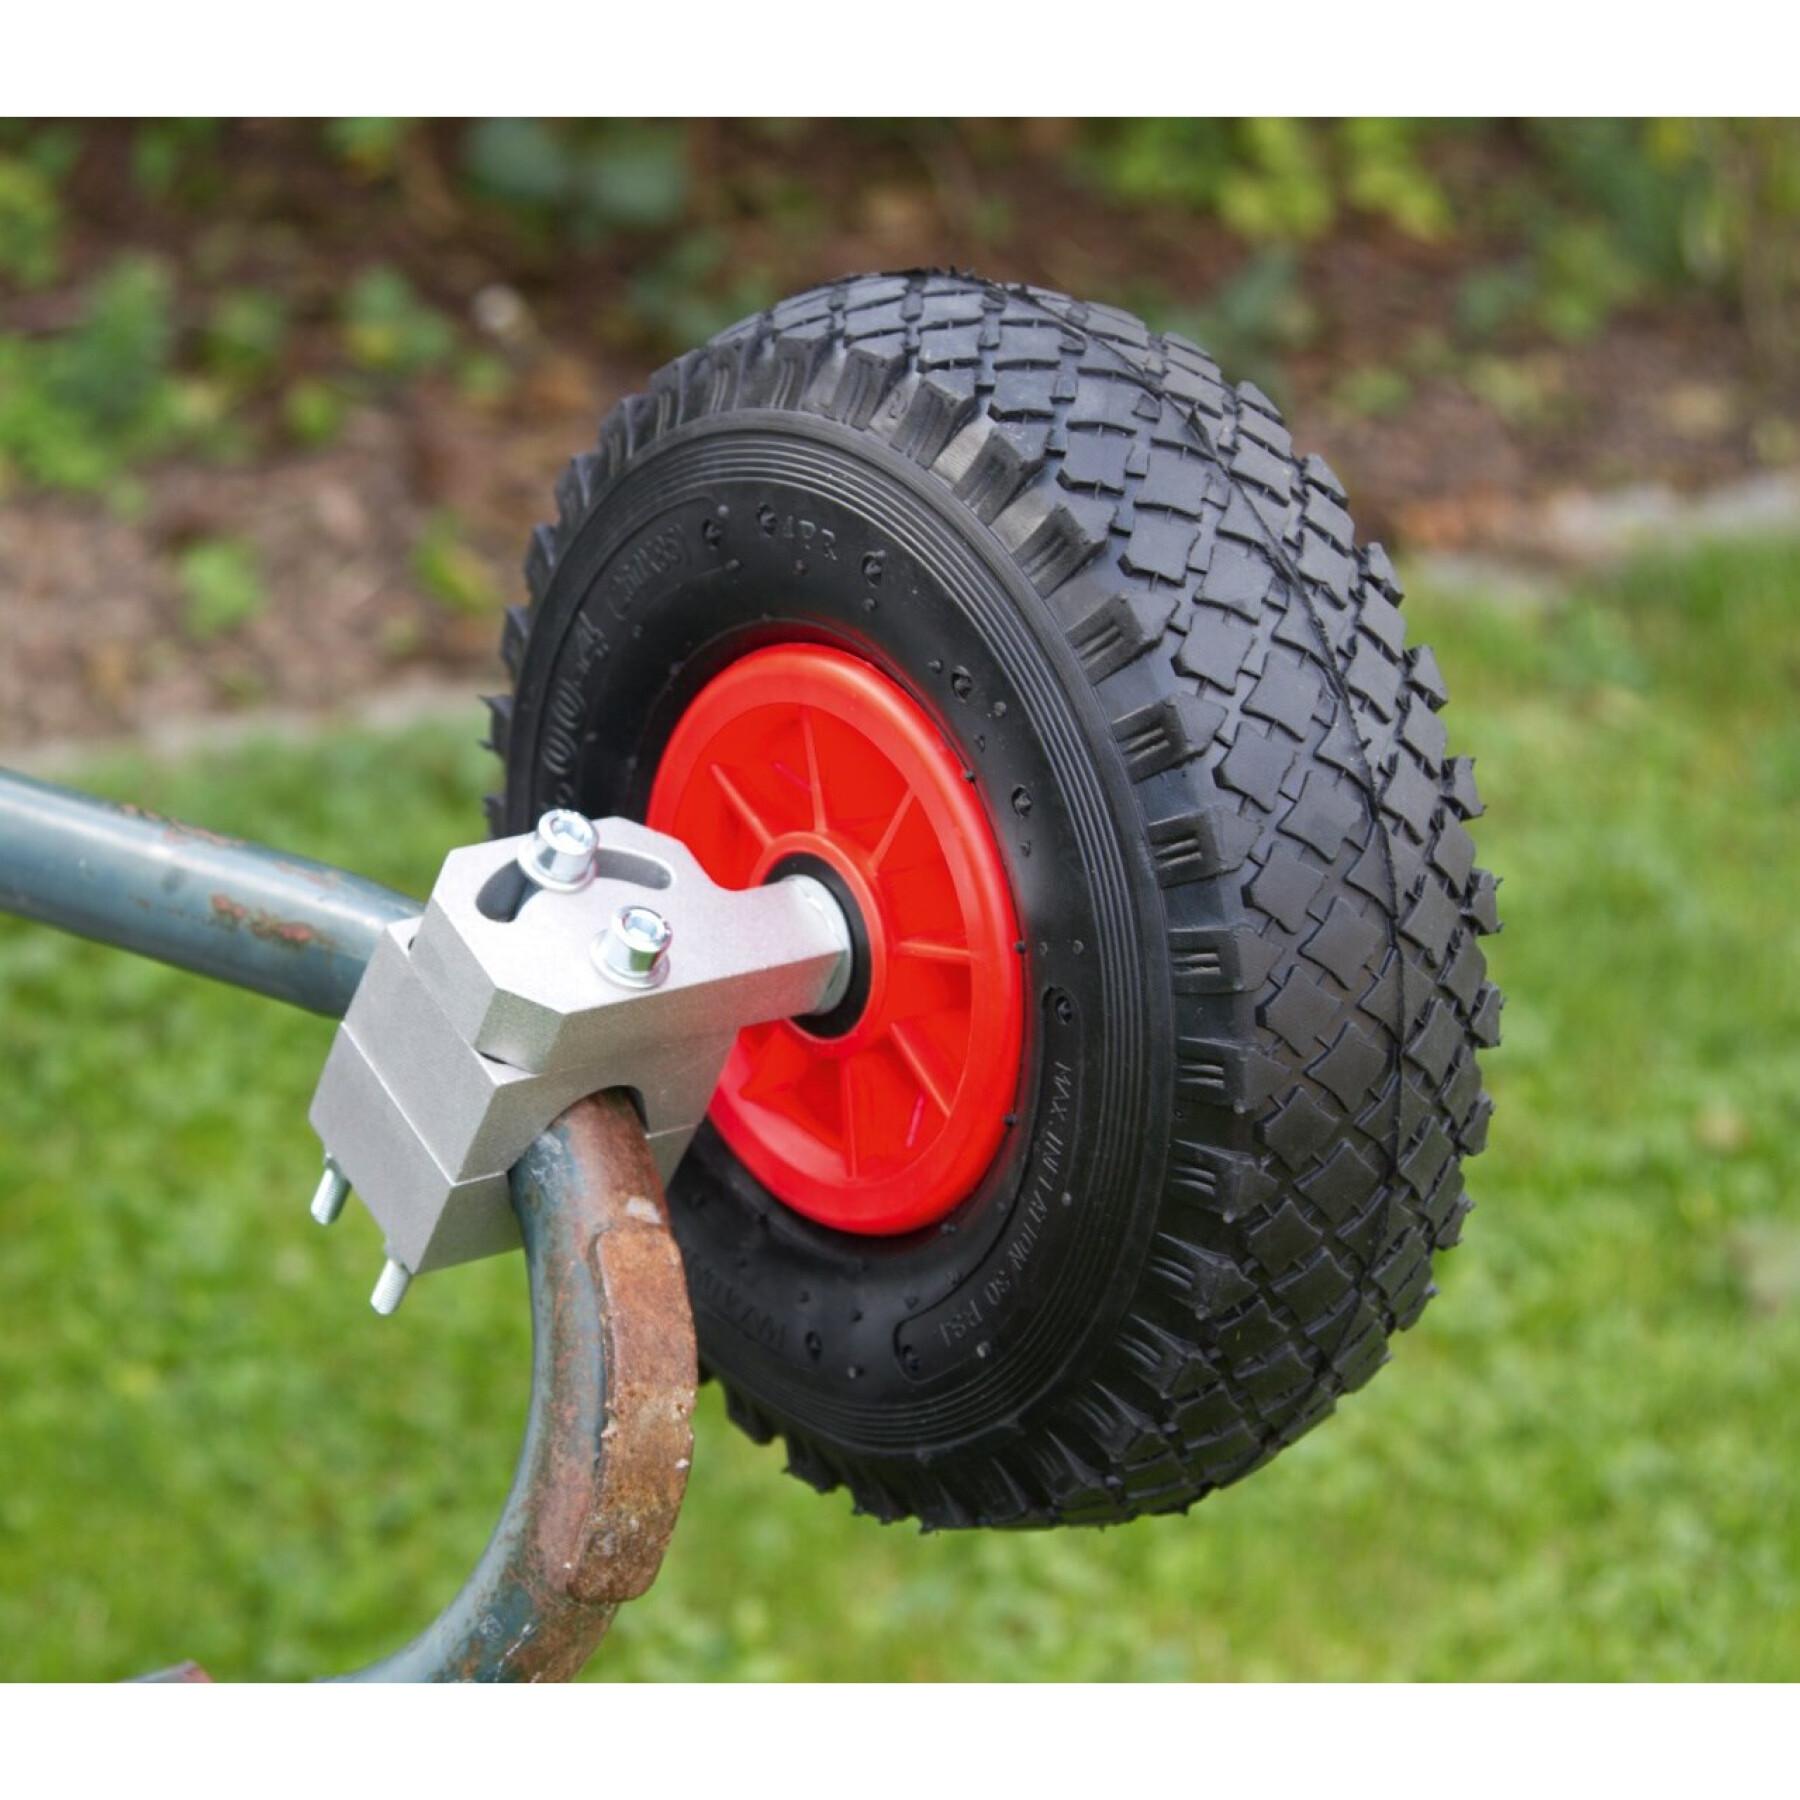 Support wheel for wheelbarrow Kerbl